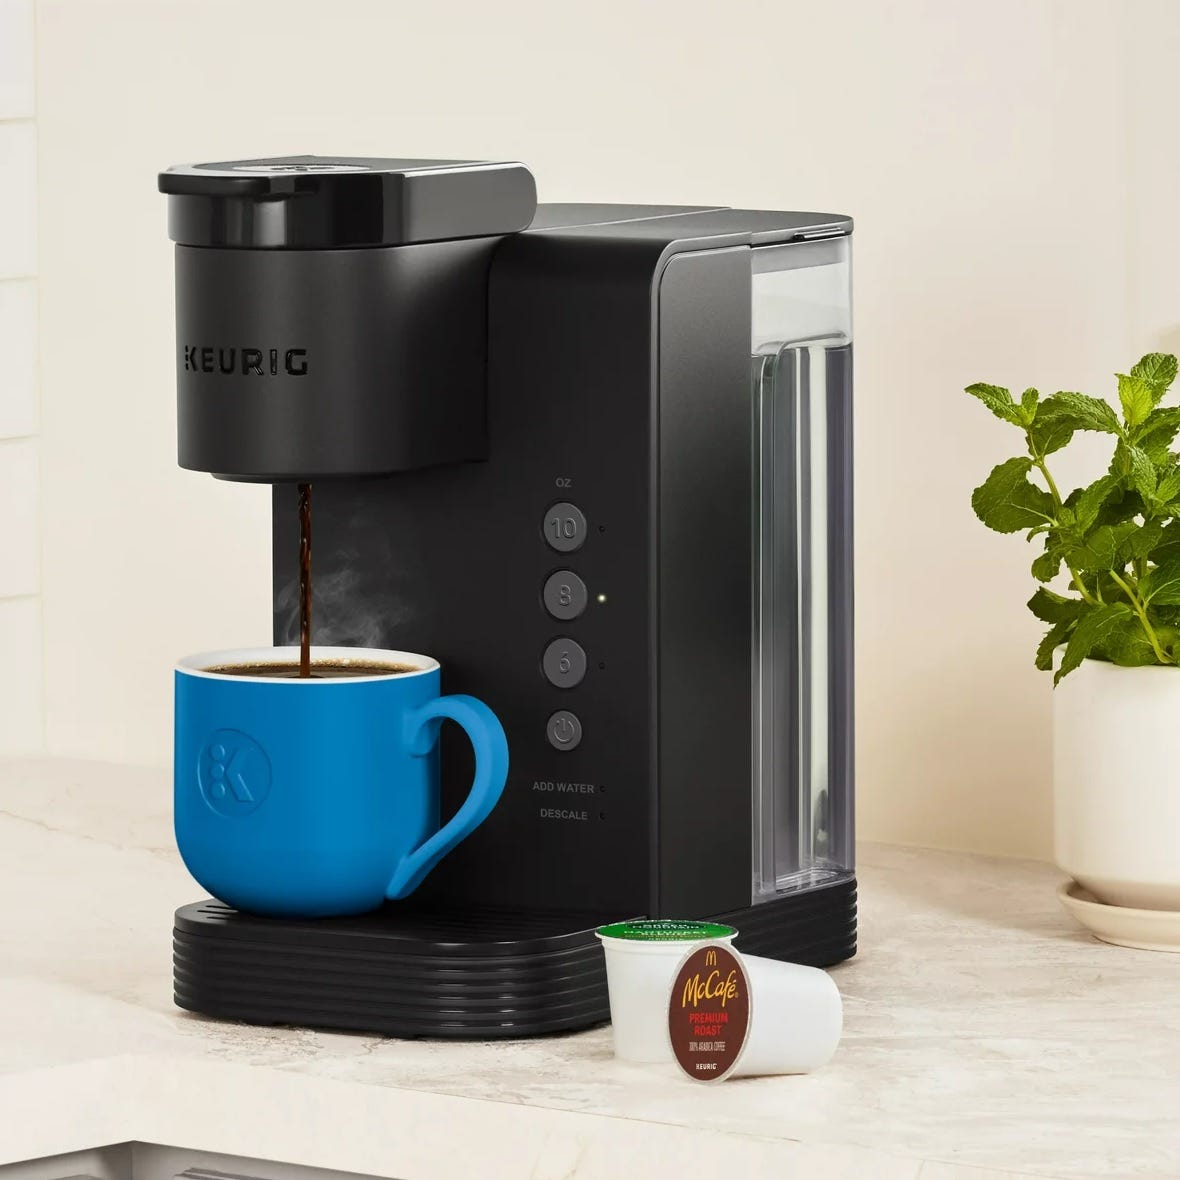 A Keurig coffee maker dispensing coffee into a blue mug alongside a McCafé K-Cup pod.